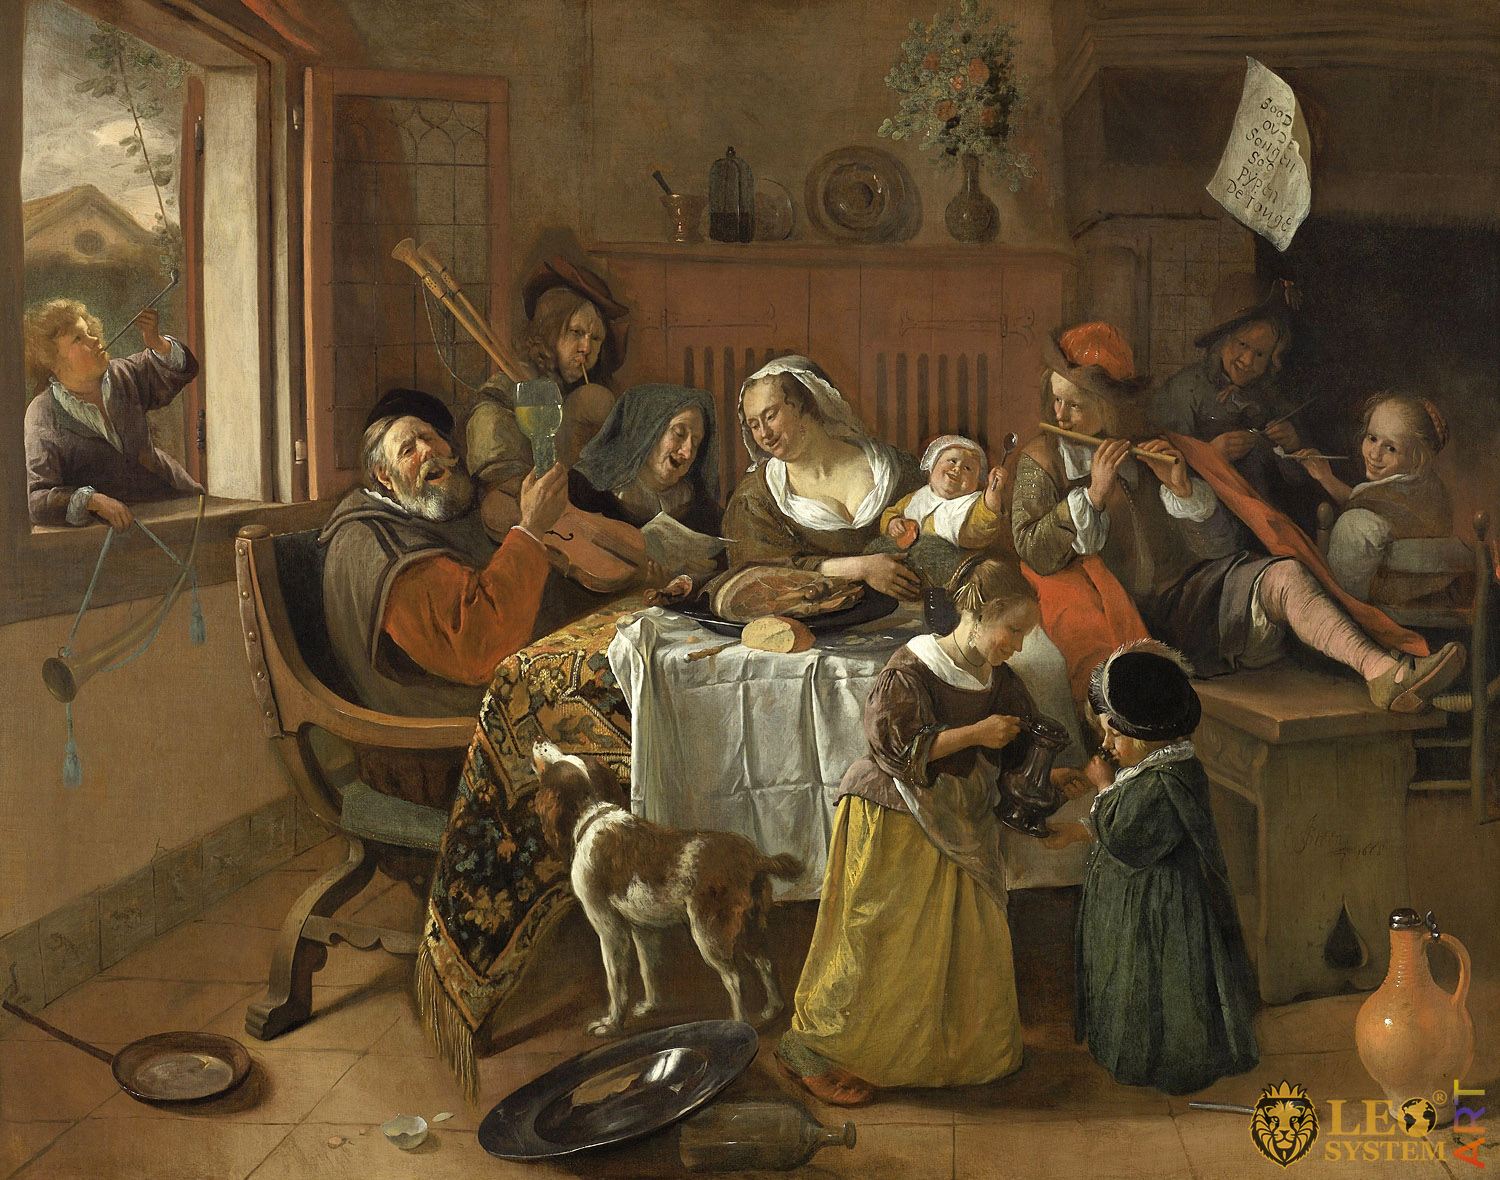 The Merry Family, Painter: Jan Steen, 1668, Amsterdam, Netherlands, Original painting